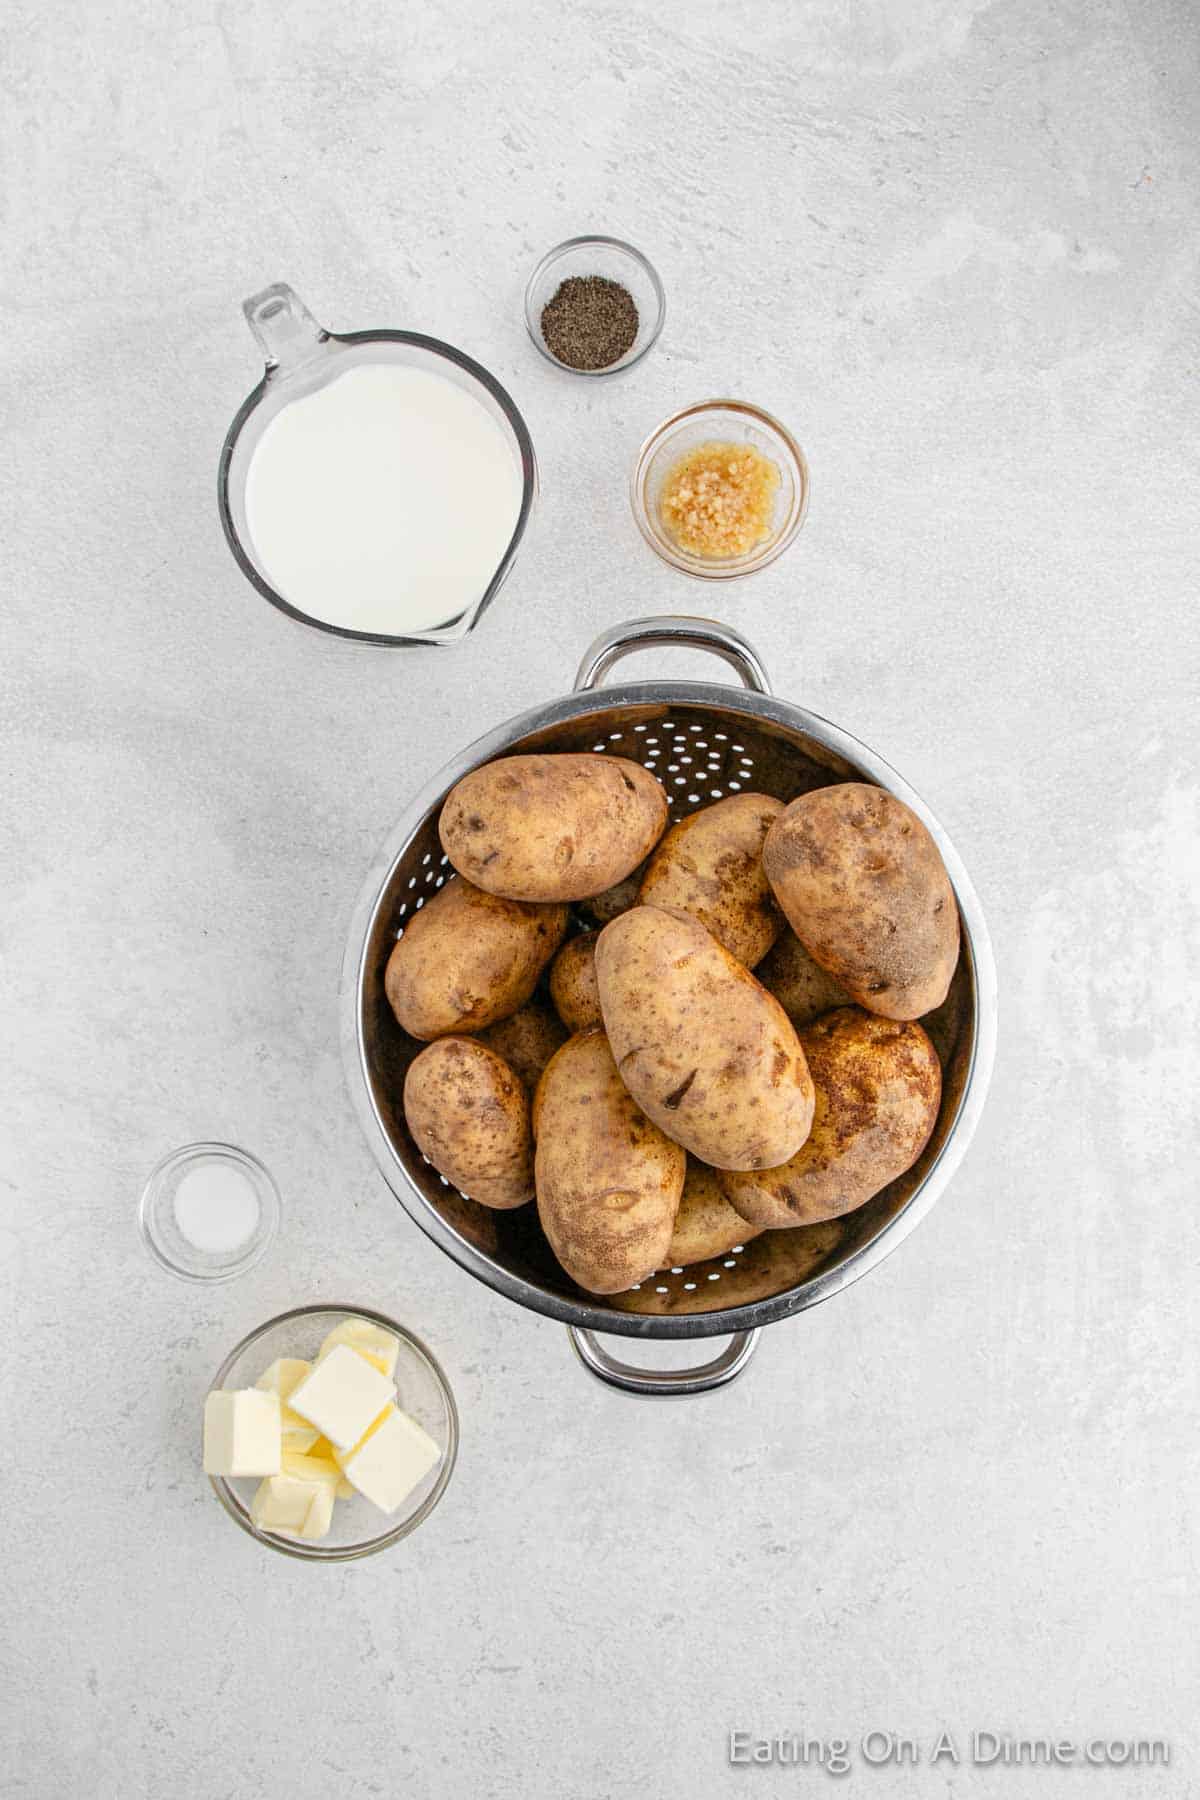 Crock Pot Mashed Potatoes Ingredients - potatoes, milk, butter, minced garlic, salt and pepper